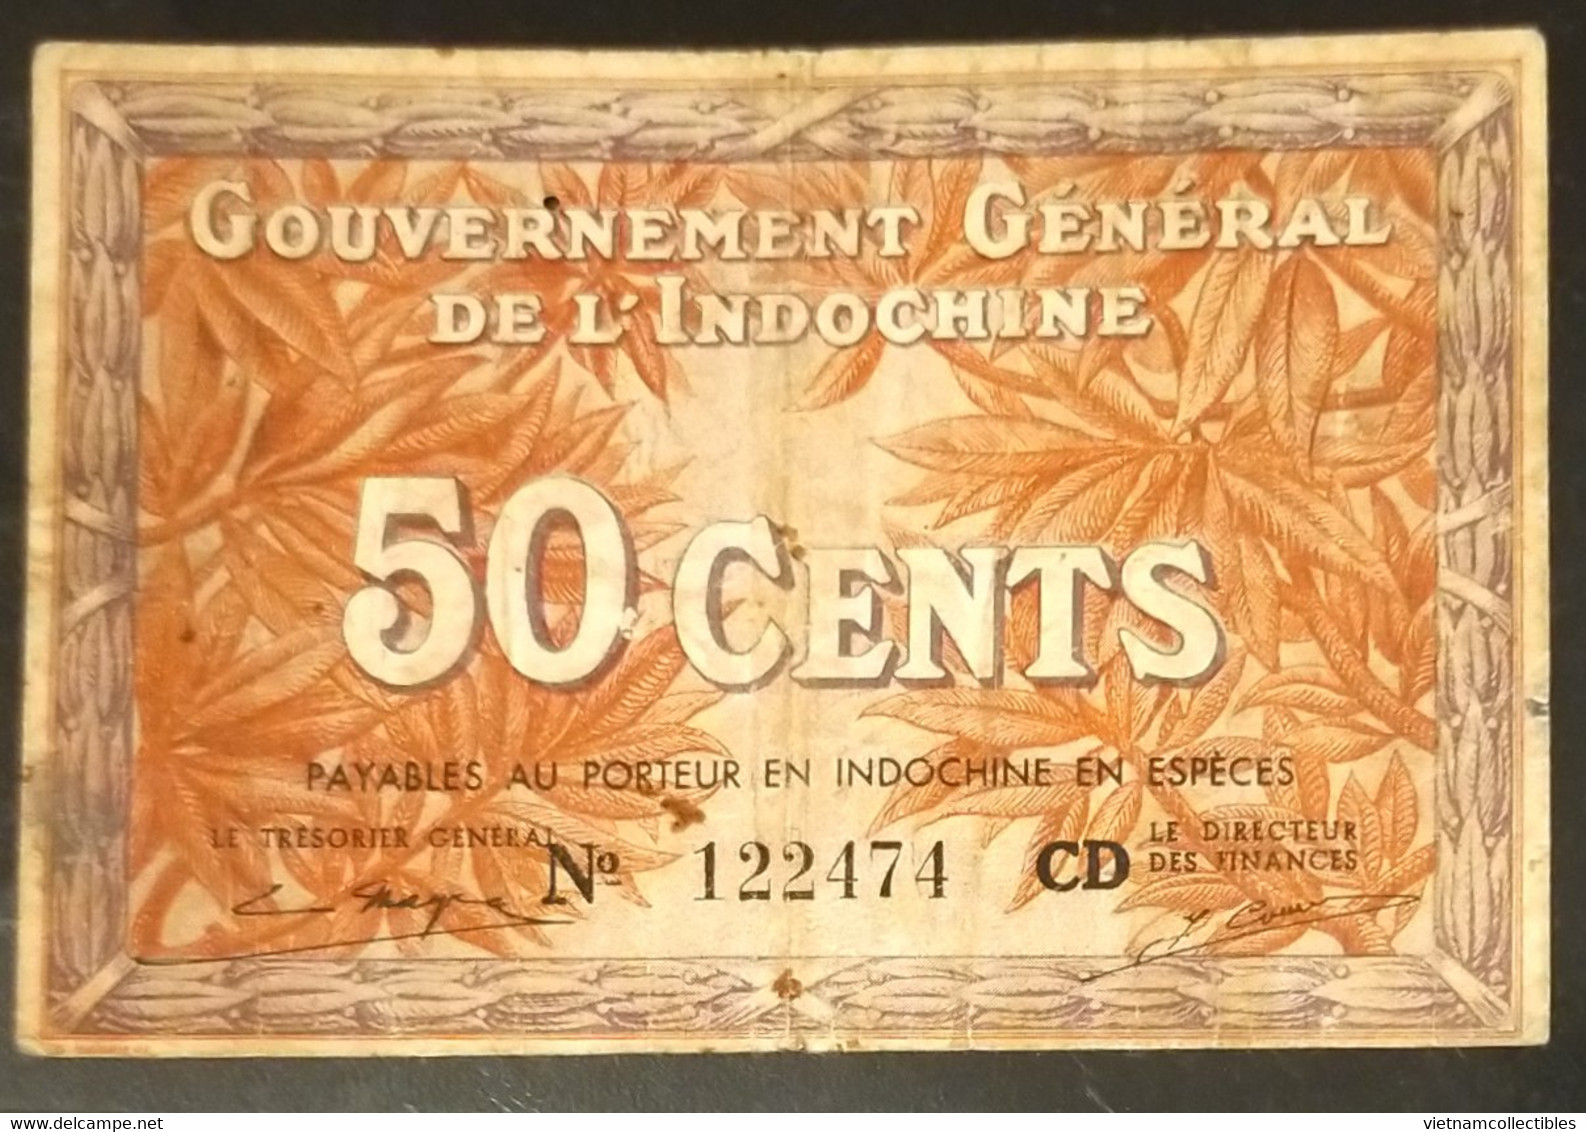 French Indochine Indochina Vietnam Viet Nam Laos Cambodia 50 Cents VF Banknote Note 1939 - Pick # 87e / 2 Photos - Indochina